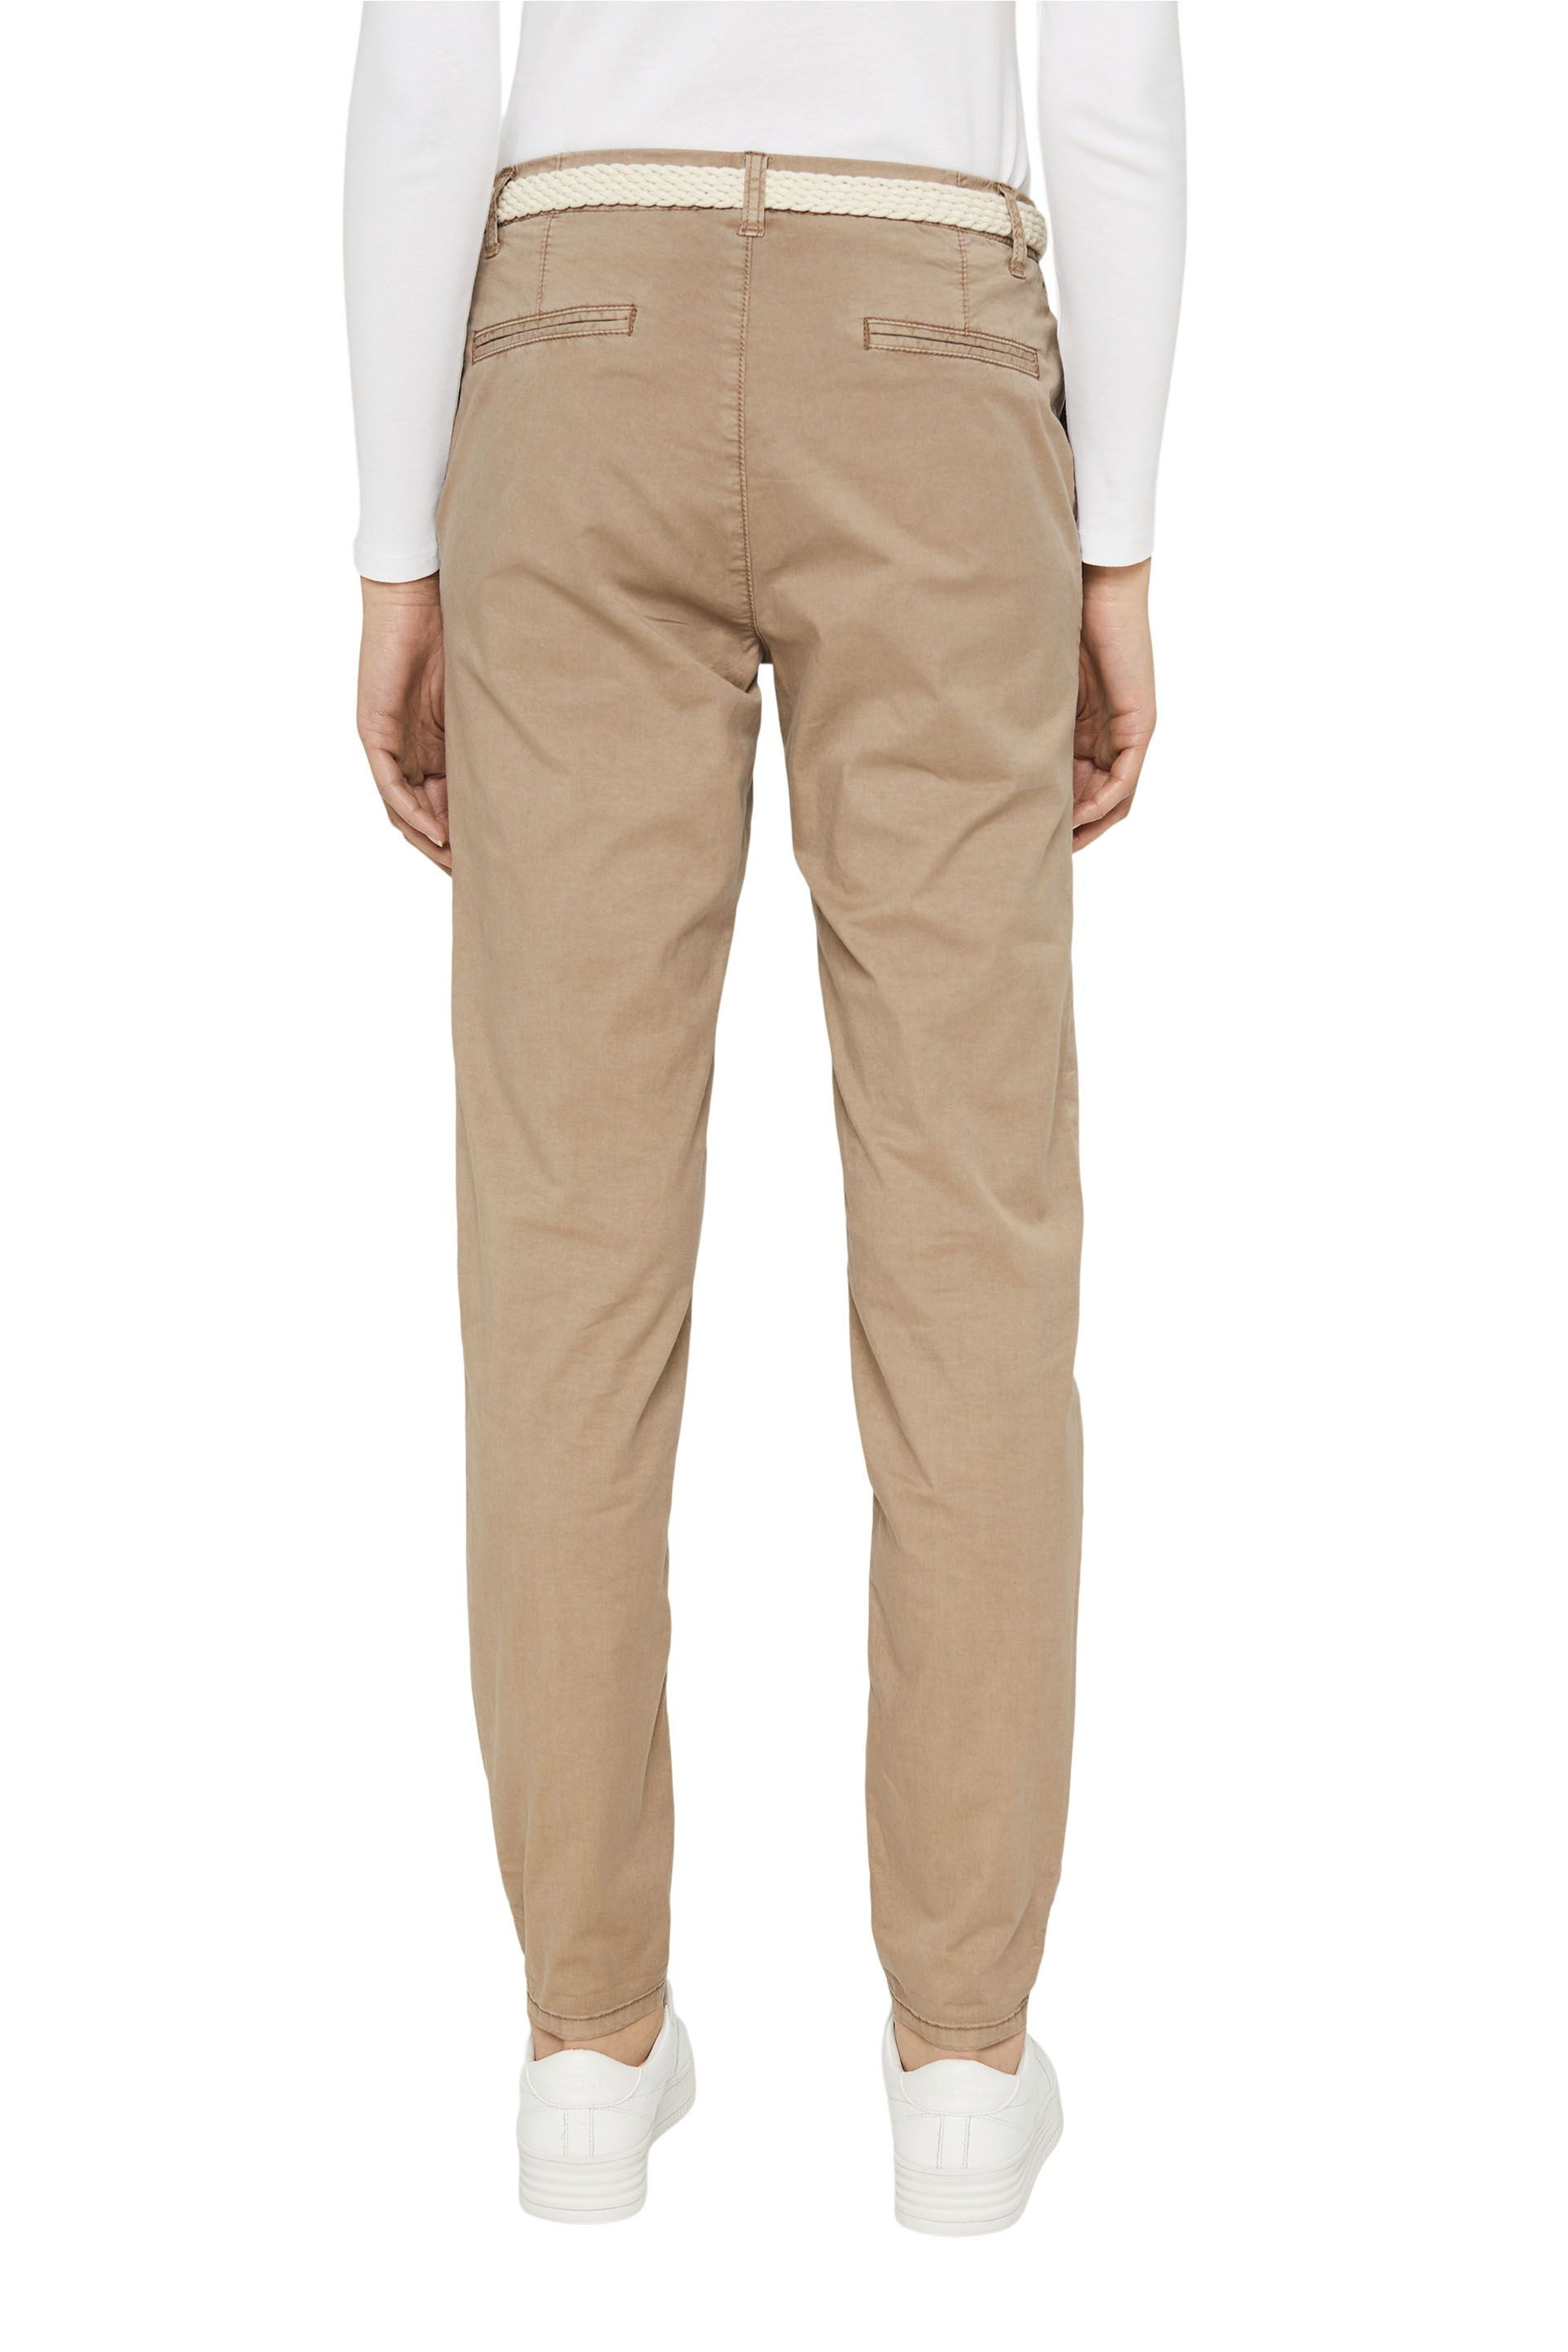 Pantaloni chino con cintura intrecciata, Beige torrone, large image number 2